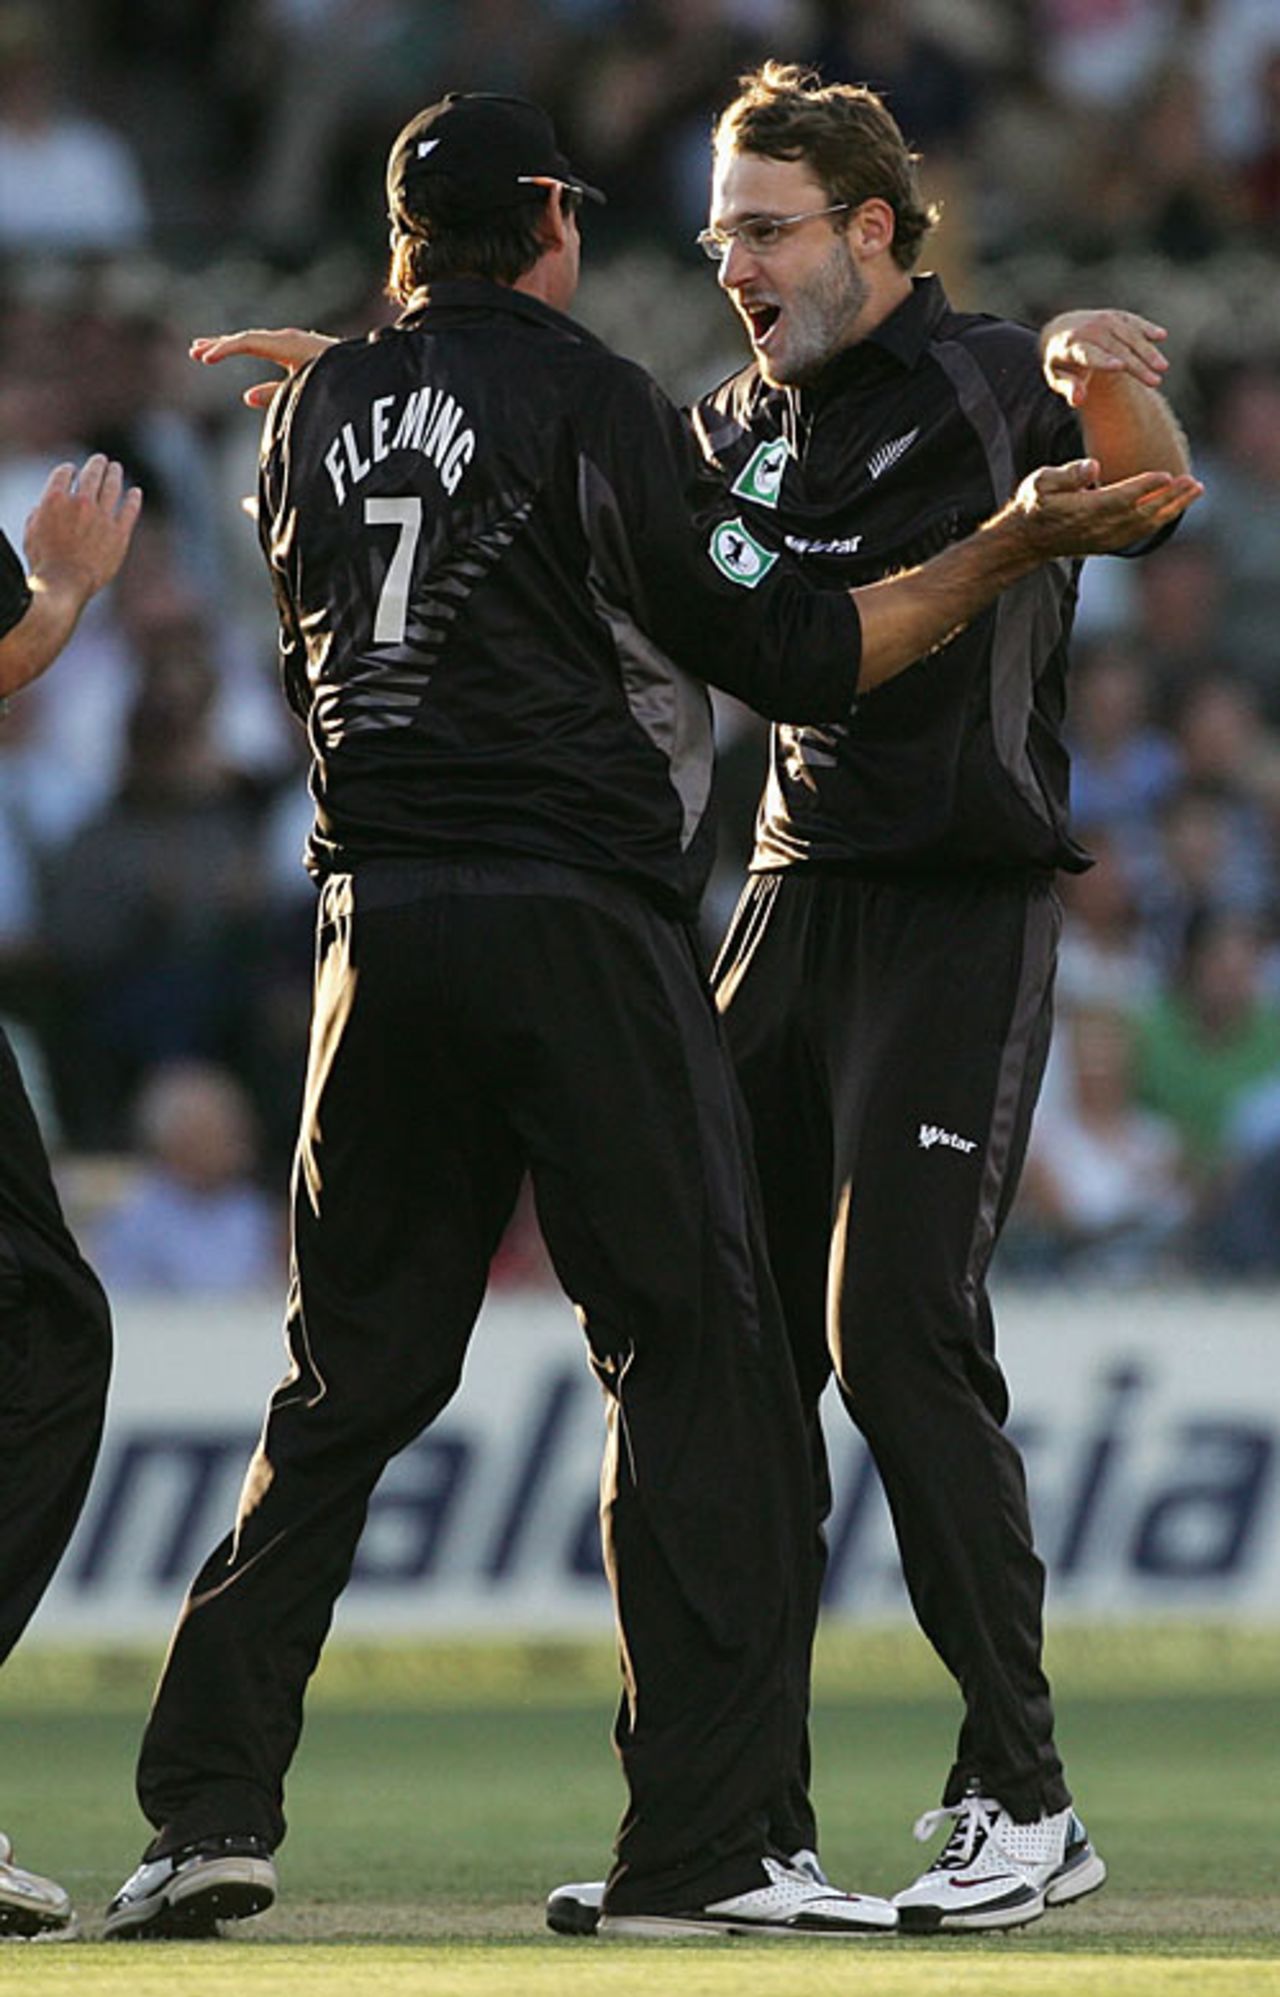 Stephen Fleming congratulates Daniel Vettori on the wicket of Paul Collingwood, England v New Zealand, CB Series, Adelaide, January 23, 2007